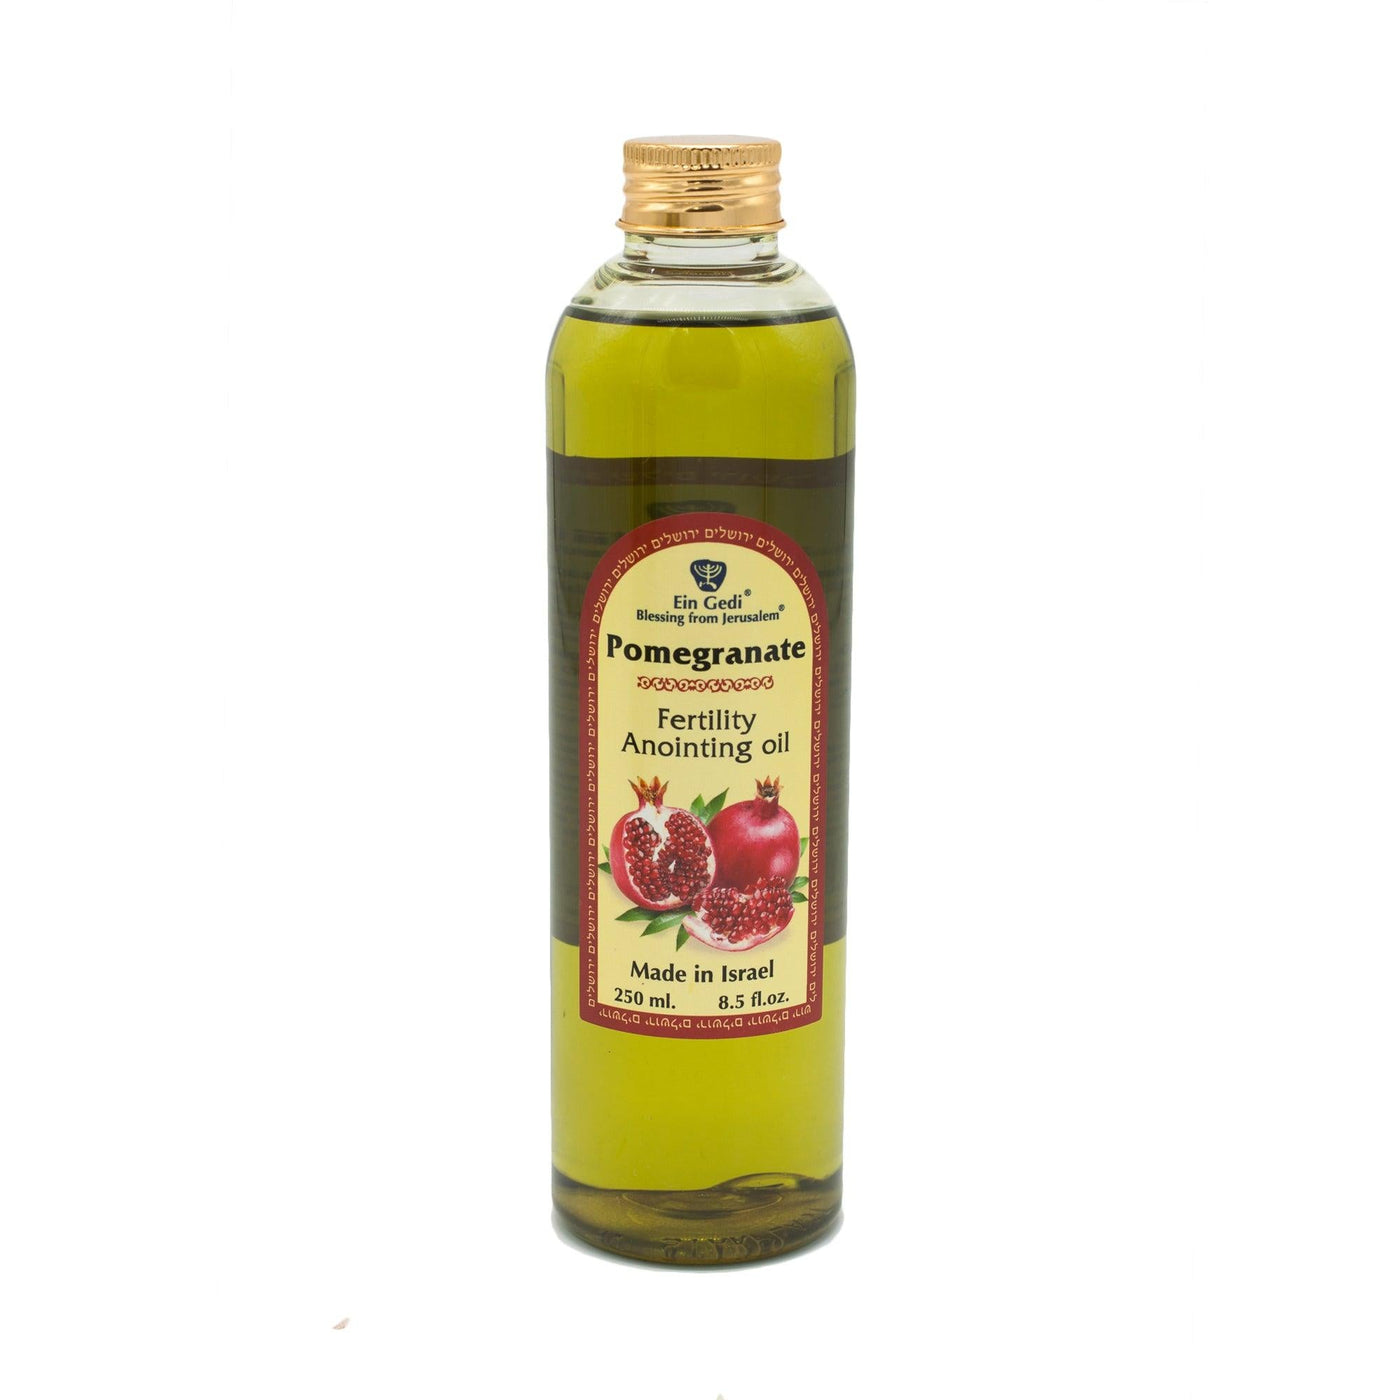 Pomegranate Fertility Anointing Oil 250 ml. From Holyland Jerusalem - Spring Nahal